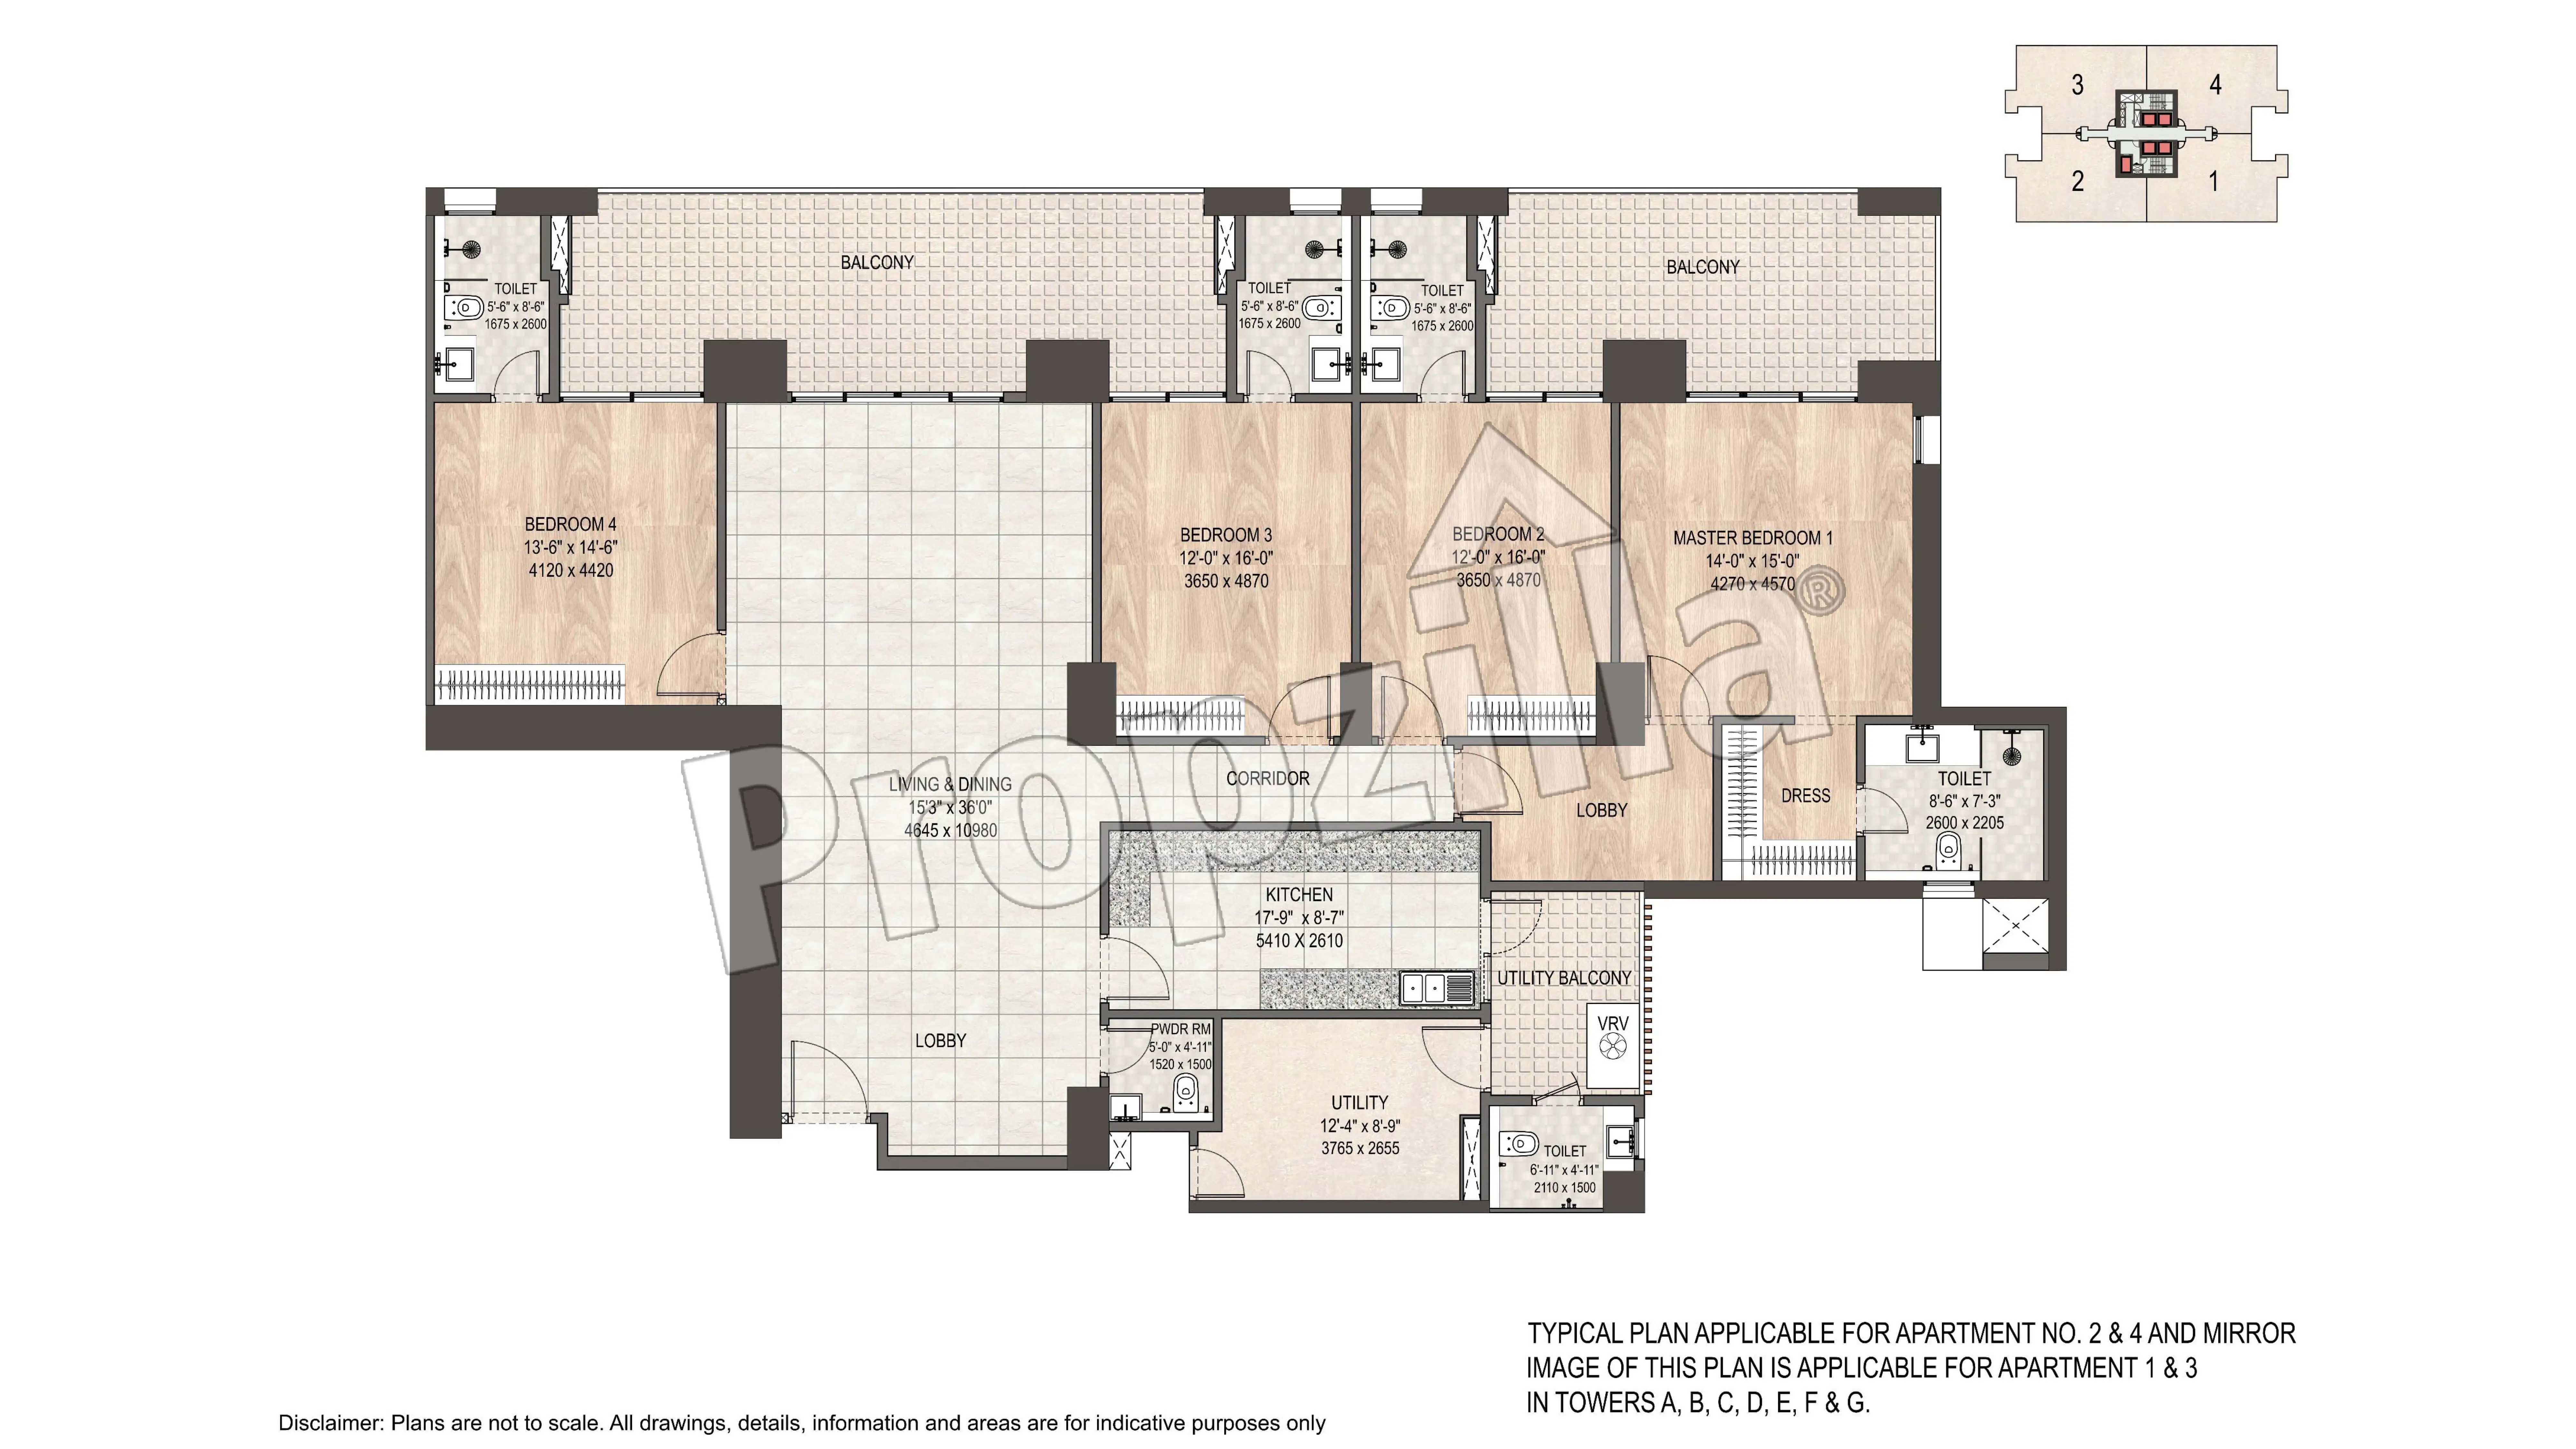 dlf Privana South 4 bhk apartments floor plan